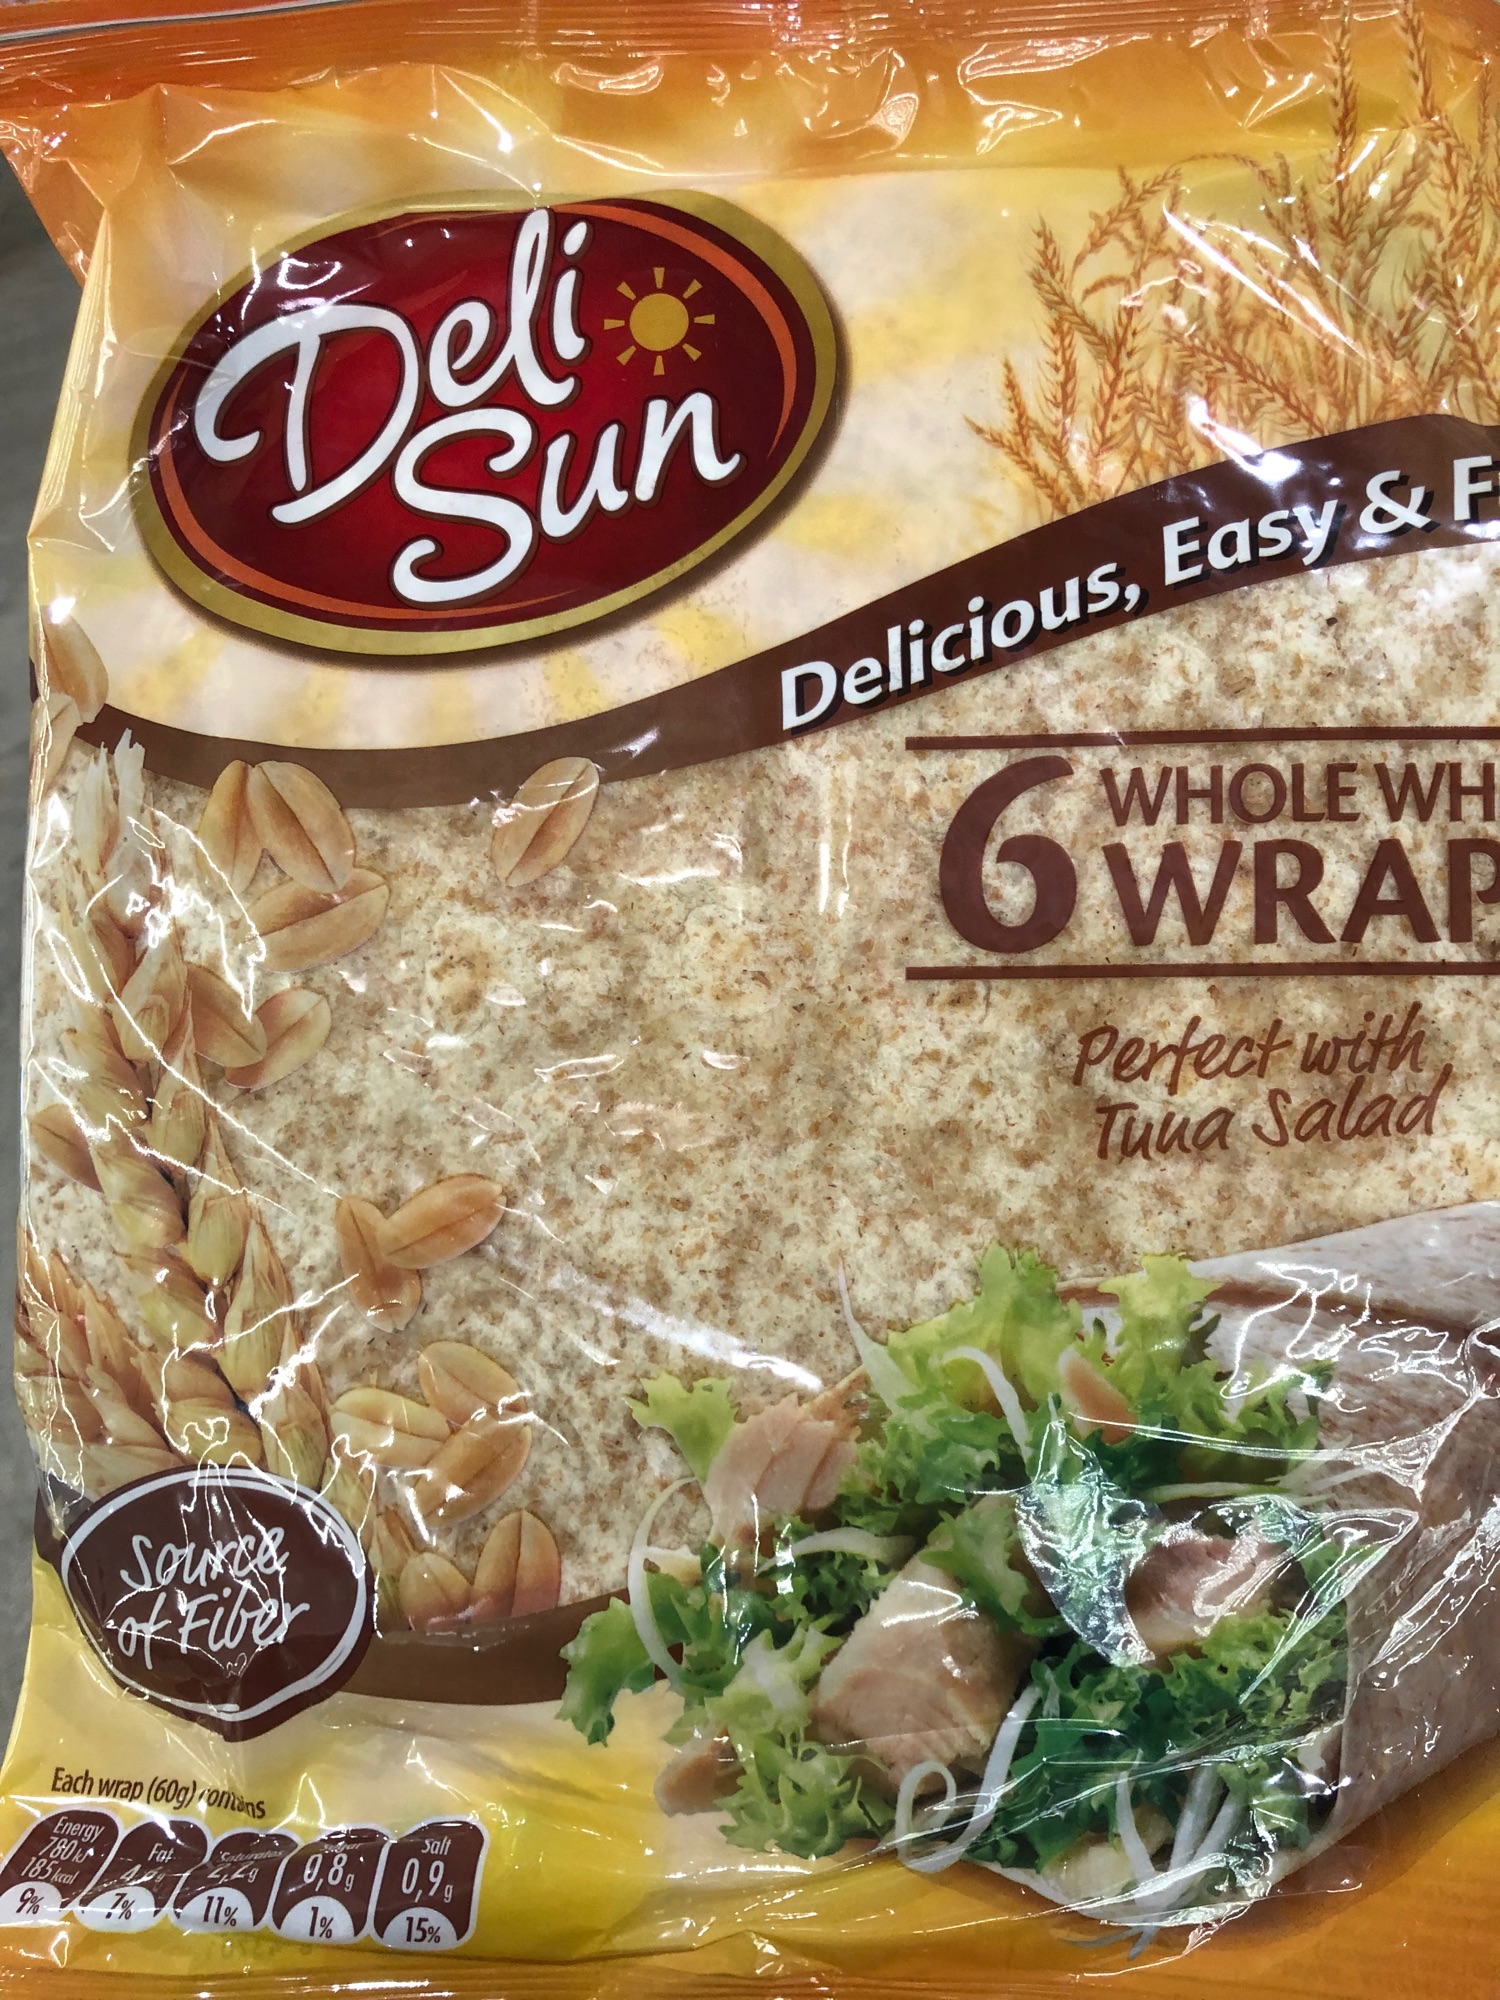 Deilsun Whole-wheat แผ่นแป้งตอริญ่า โฮลวีท 6 wraps